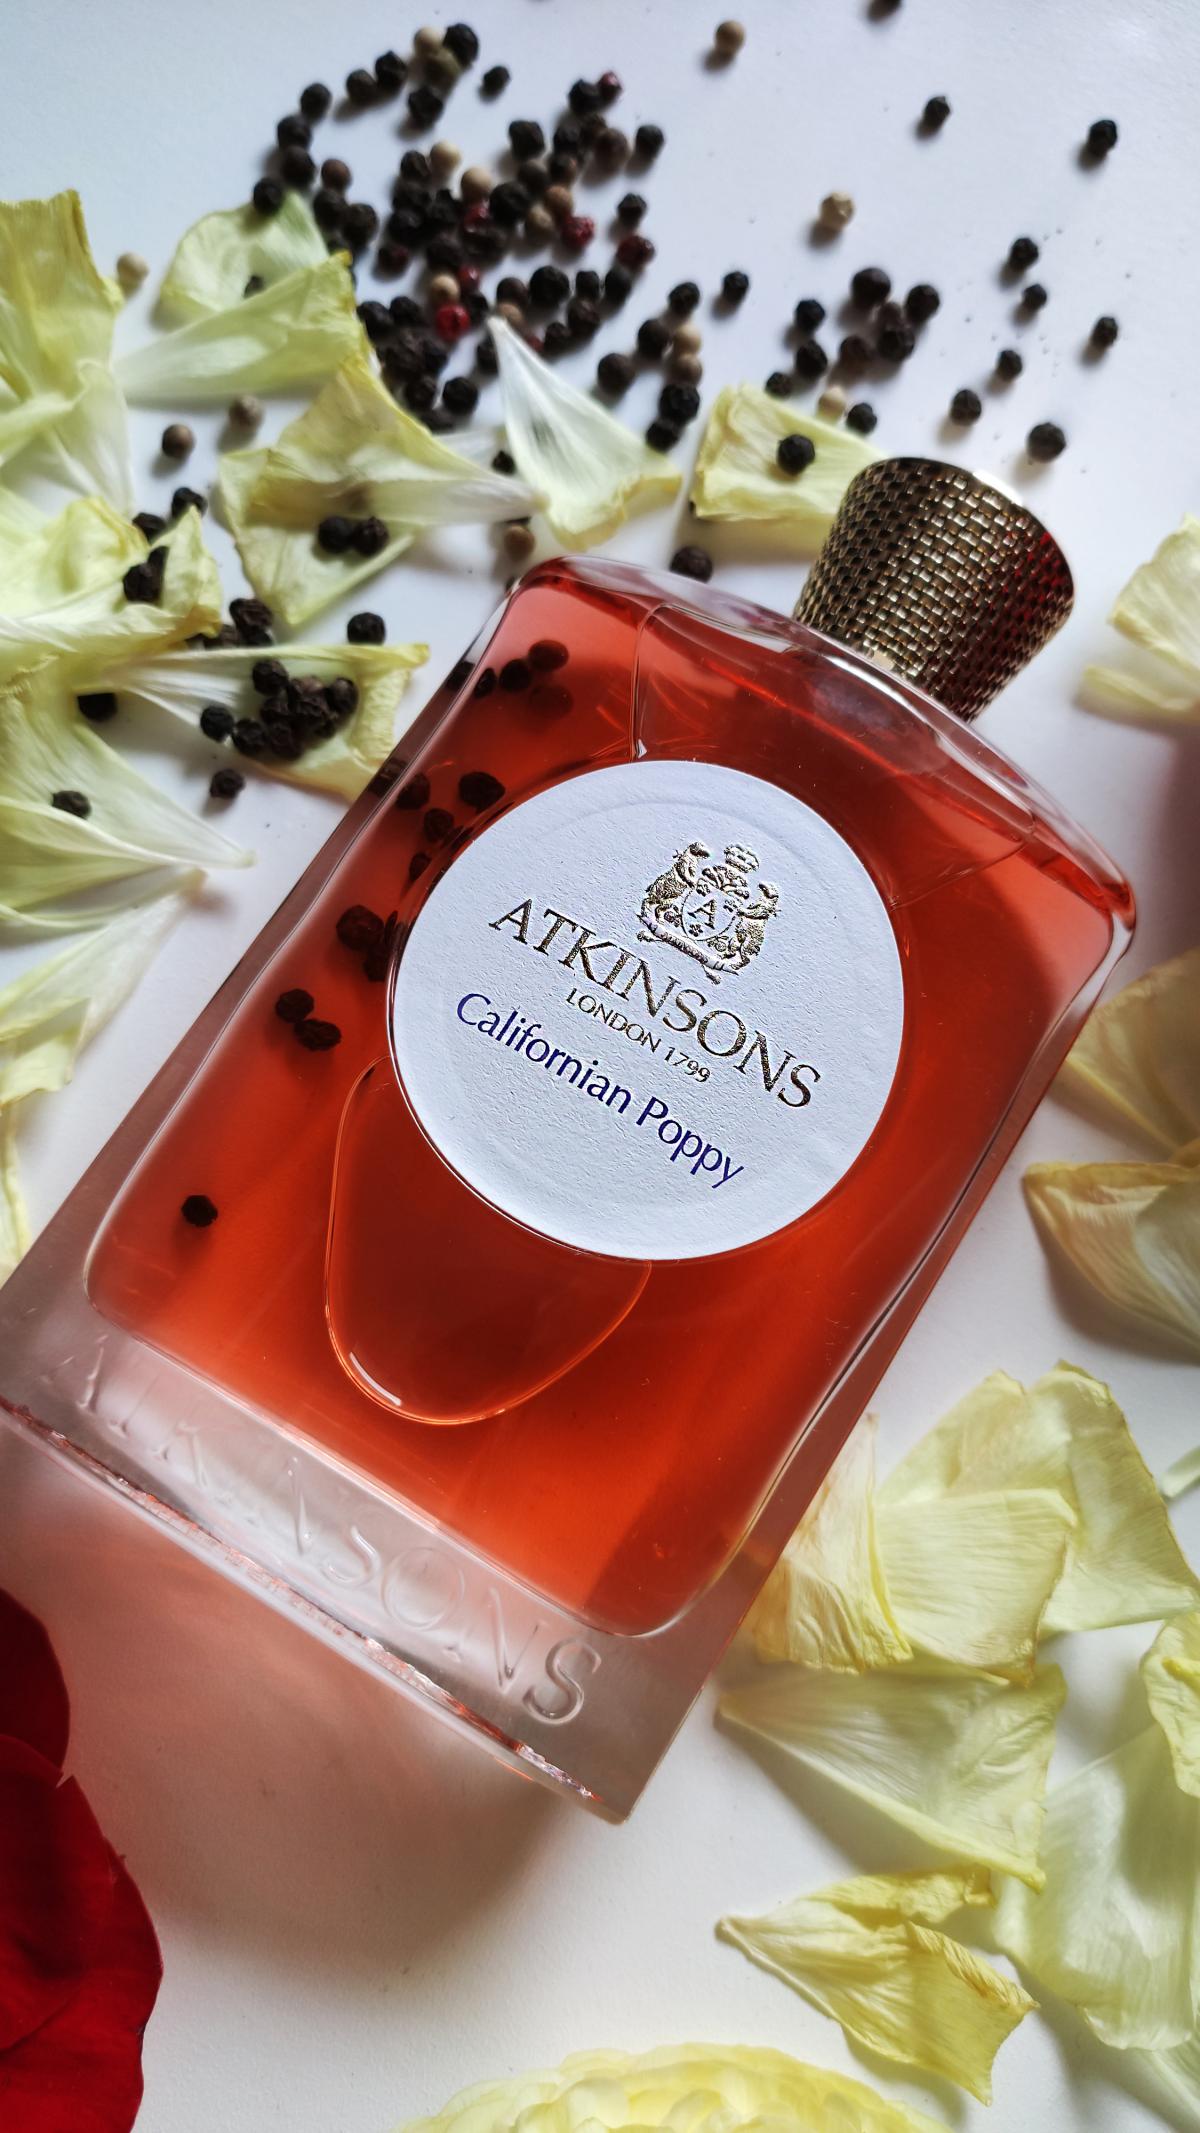 California Poppy (new) Atkinsons perfume - a fragrance for women 2017